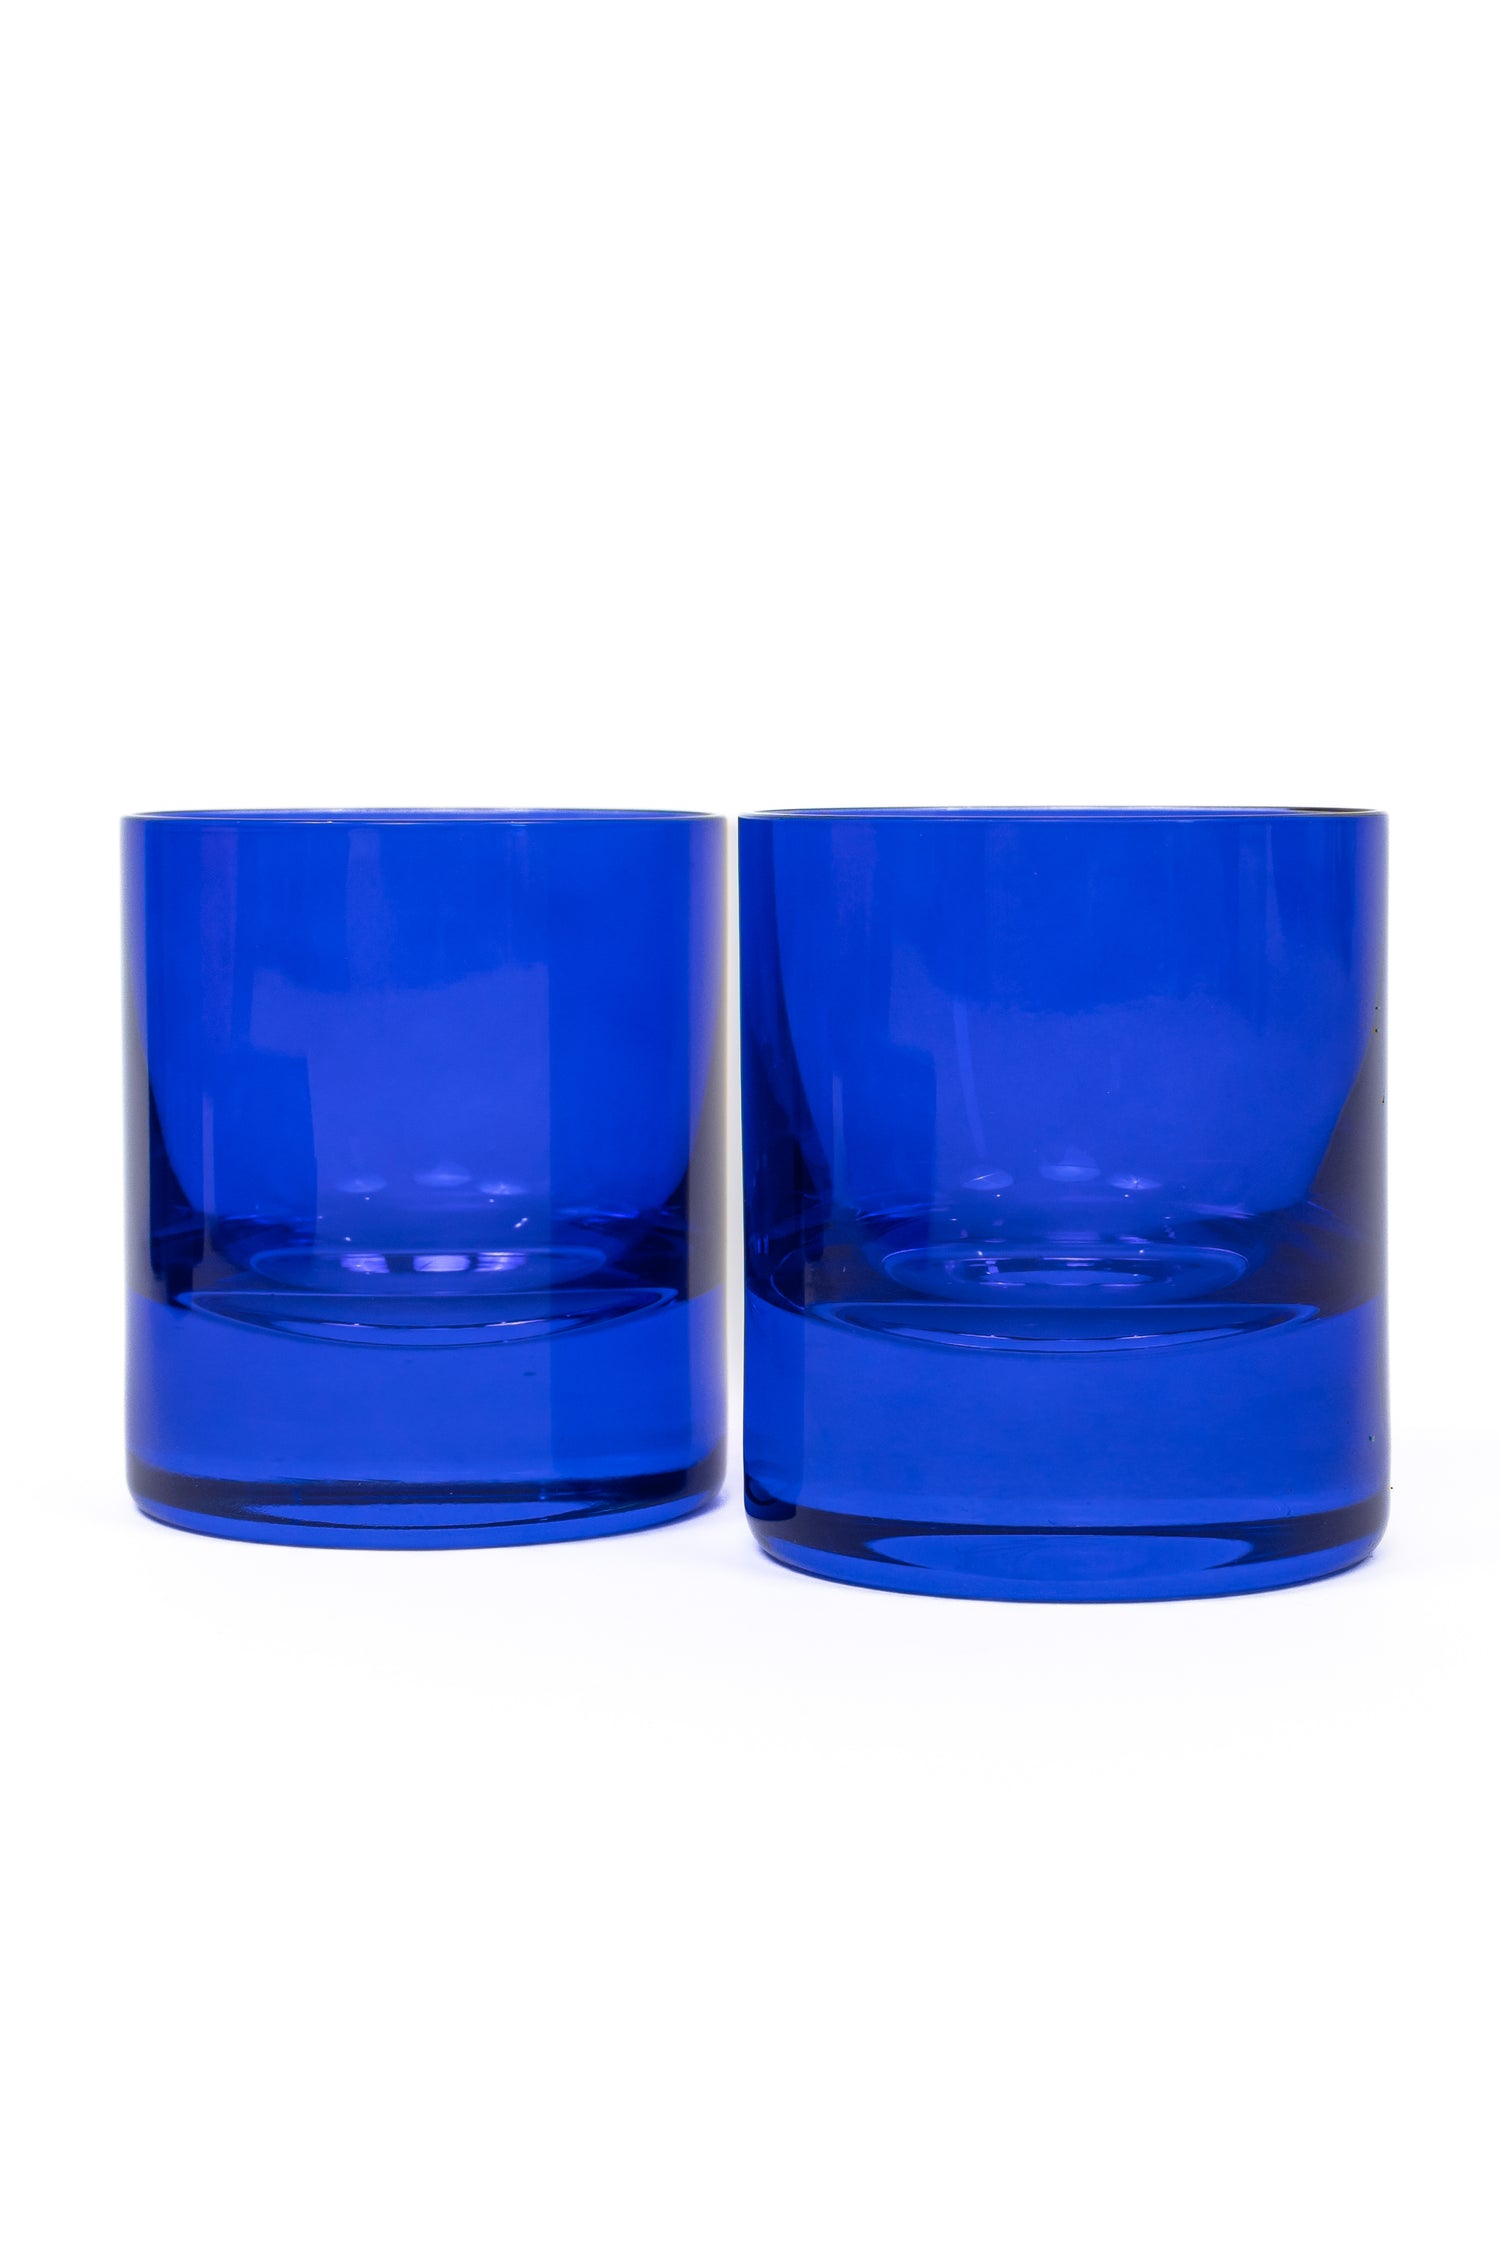 Estelle Colored Rocks Glass - Set of 2 {Royal Blue}